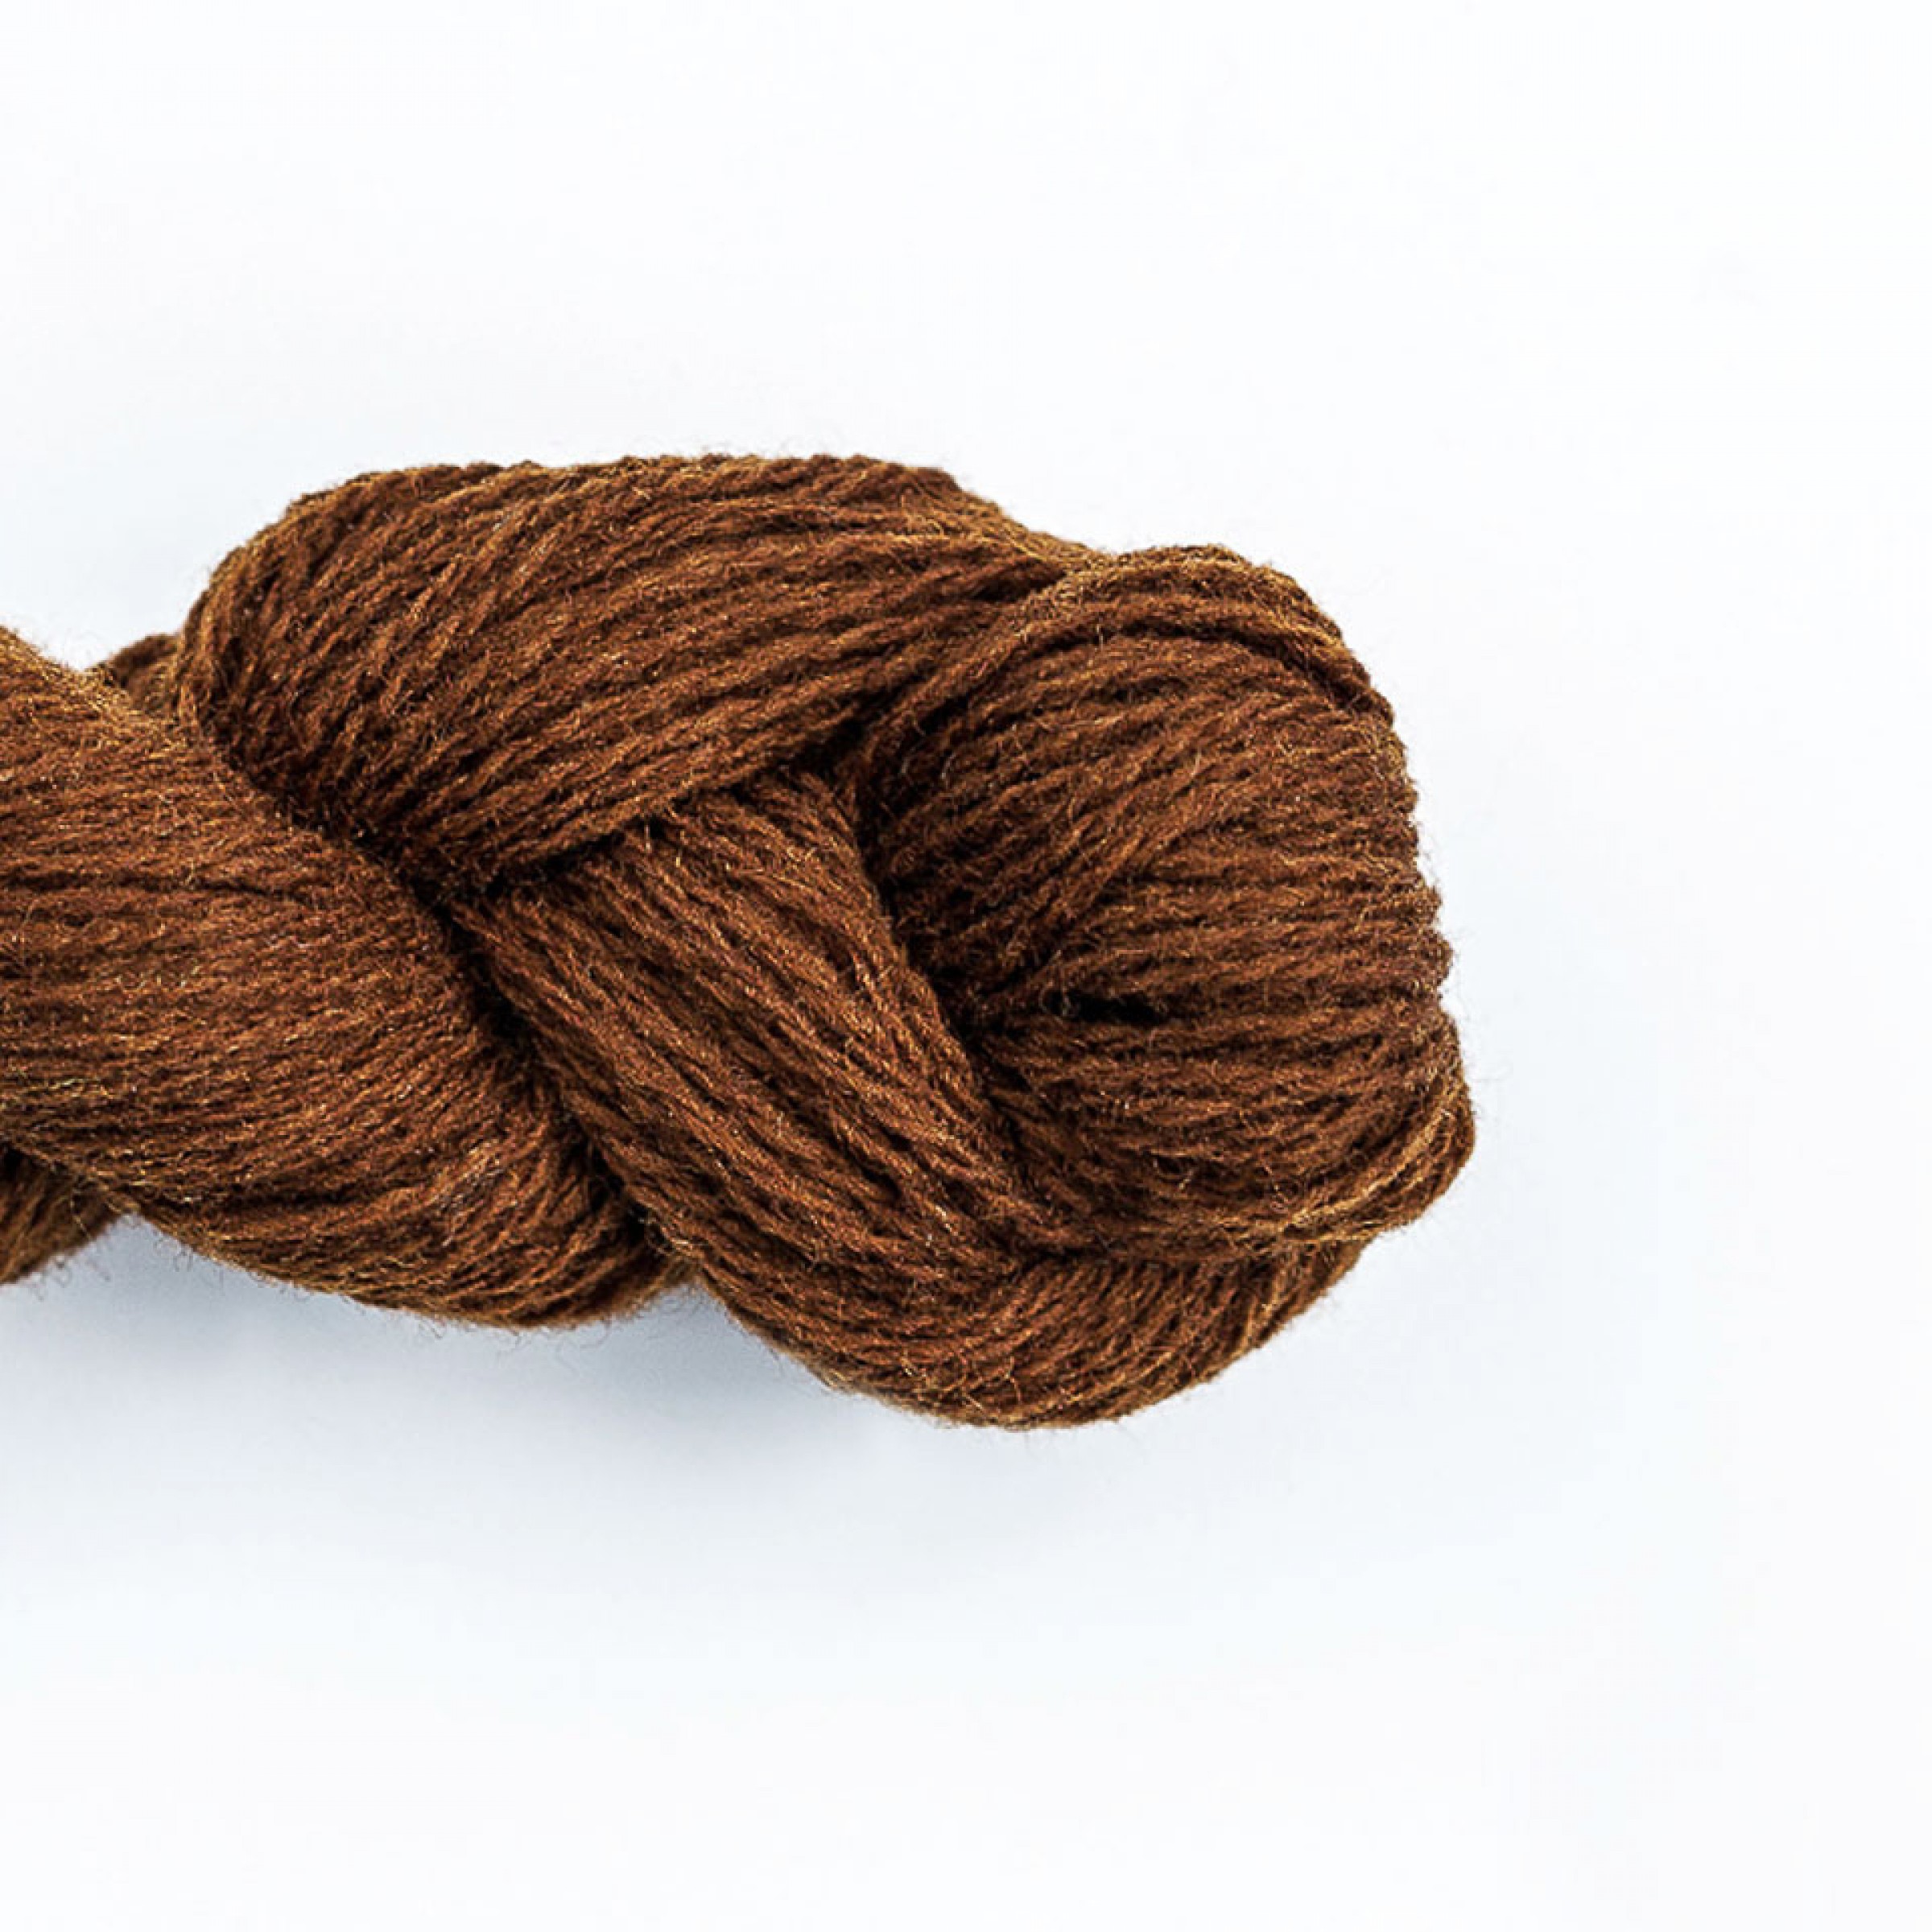 Wool yarn,100% natural, knitting - crochet - craft supplies, dark